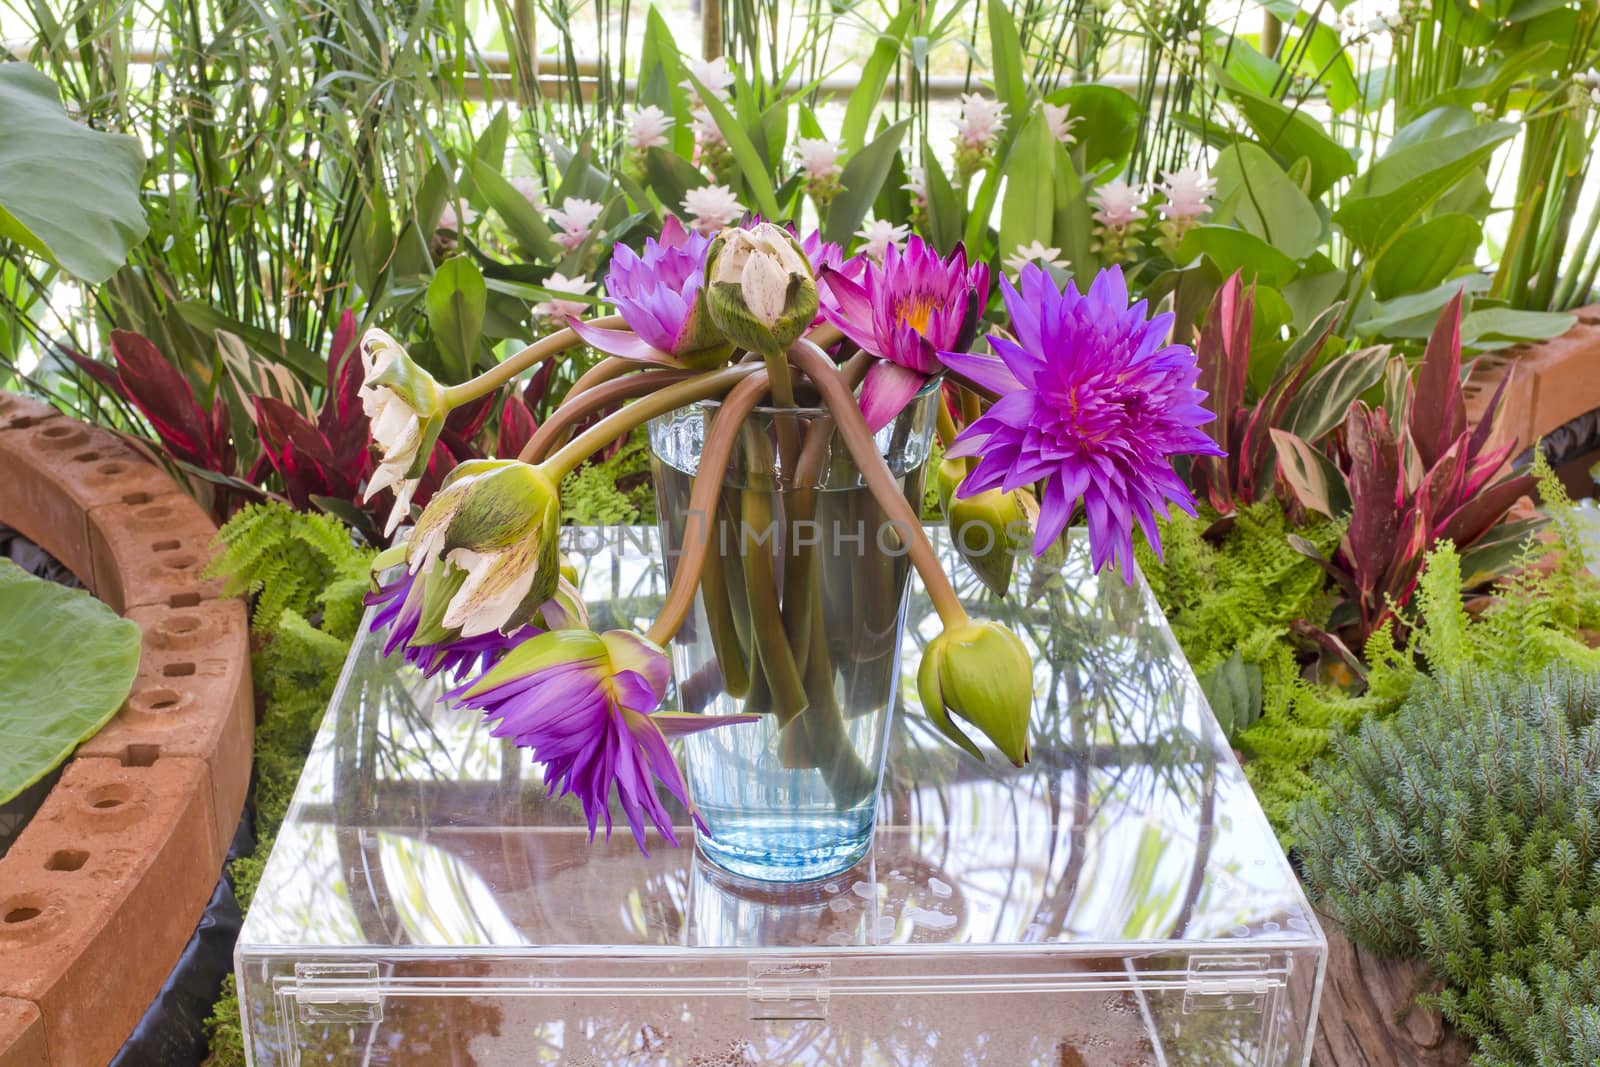 Floristry Pink and purple lotus flowers in glass vase.